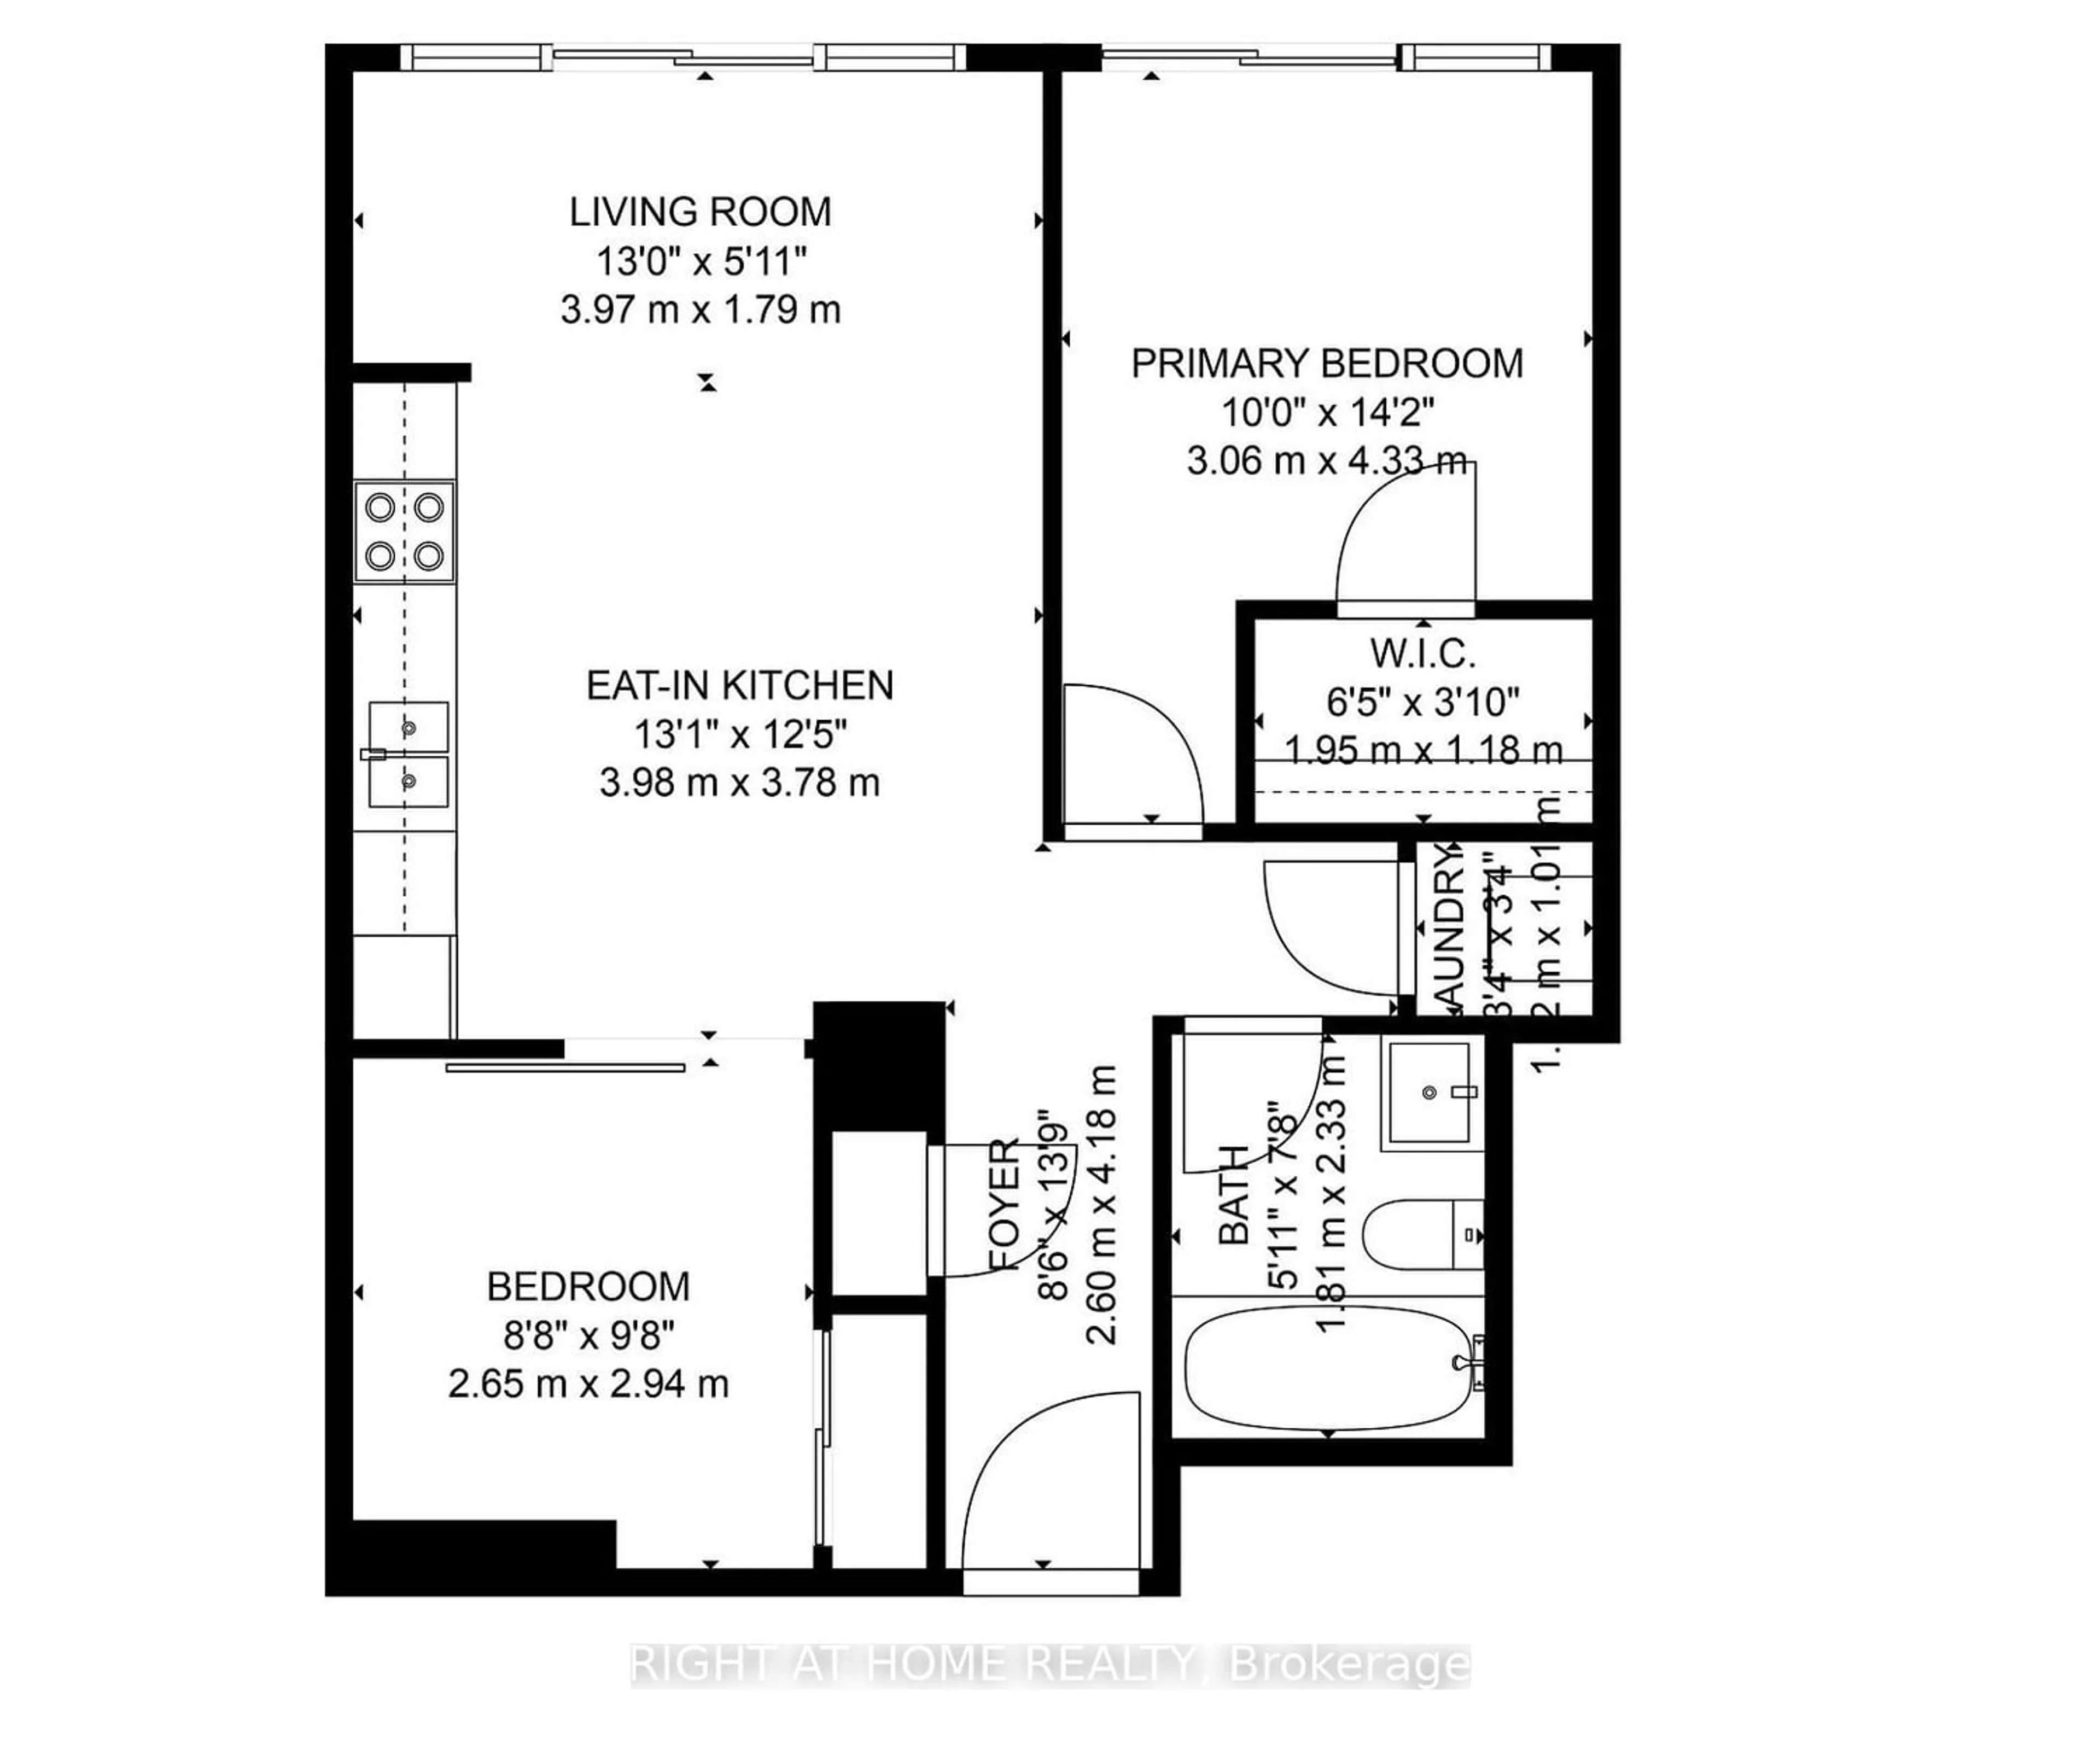 Floor plan for 2015 Sheppard Ave #1111, Toronto Ontario M2J 1W6